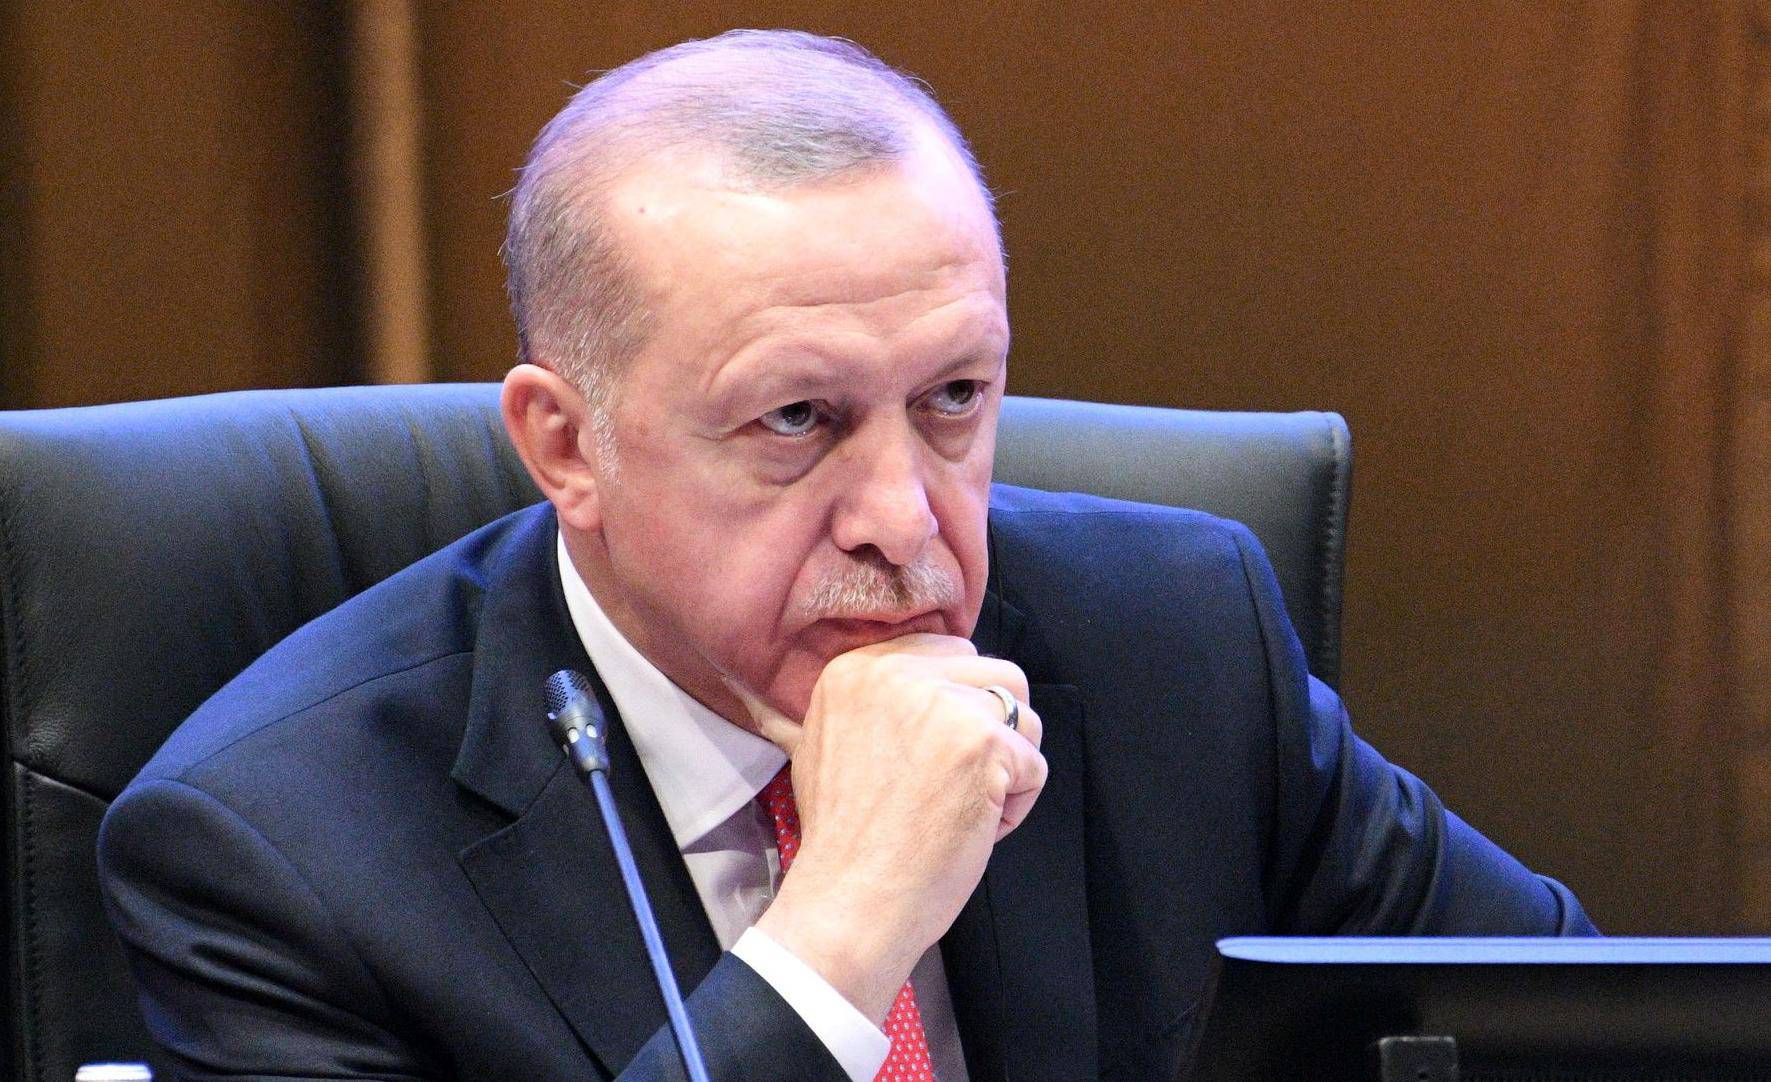 Turkey's President Recep Tayyip Erdogan reacts during a Kuala Lumpur Summit roundtable session in Kuala Lumpur